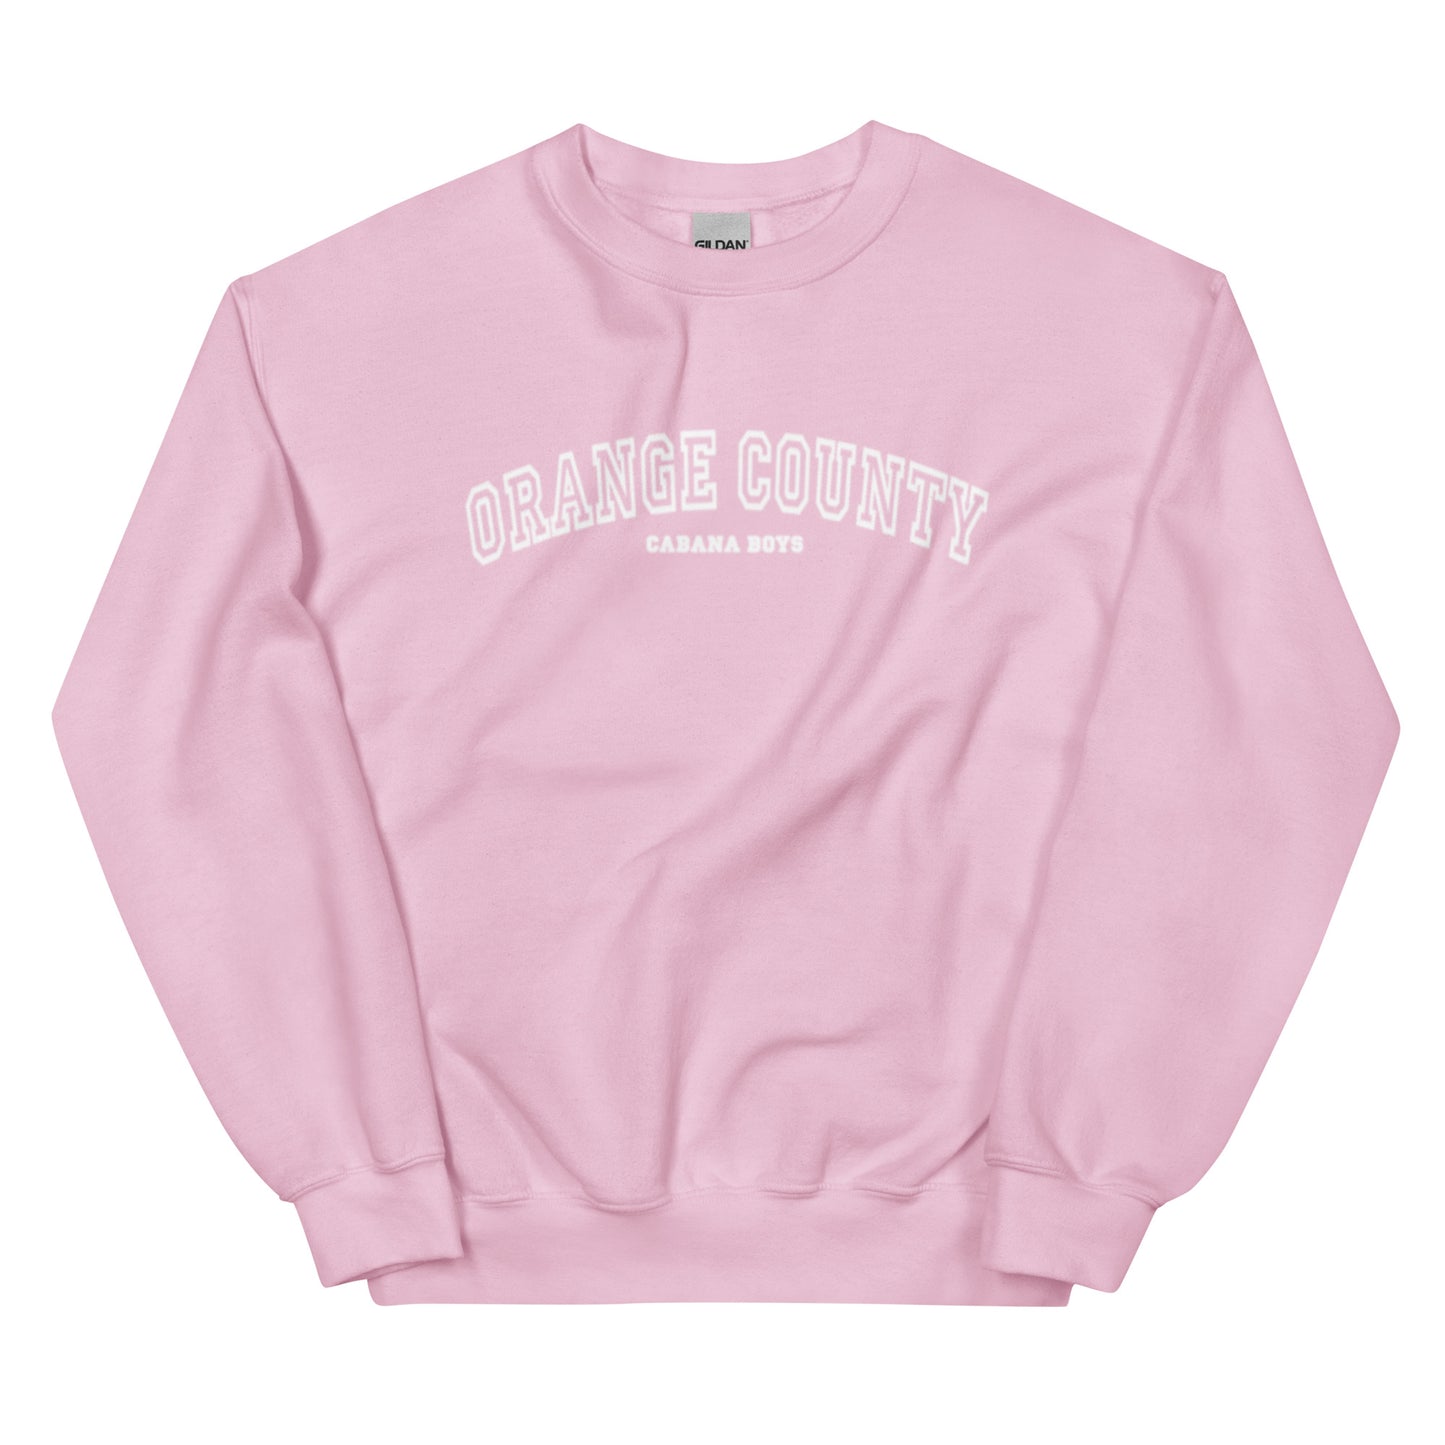 Collegiate Collection Orange County Sweatshirt